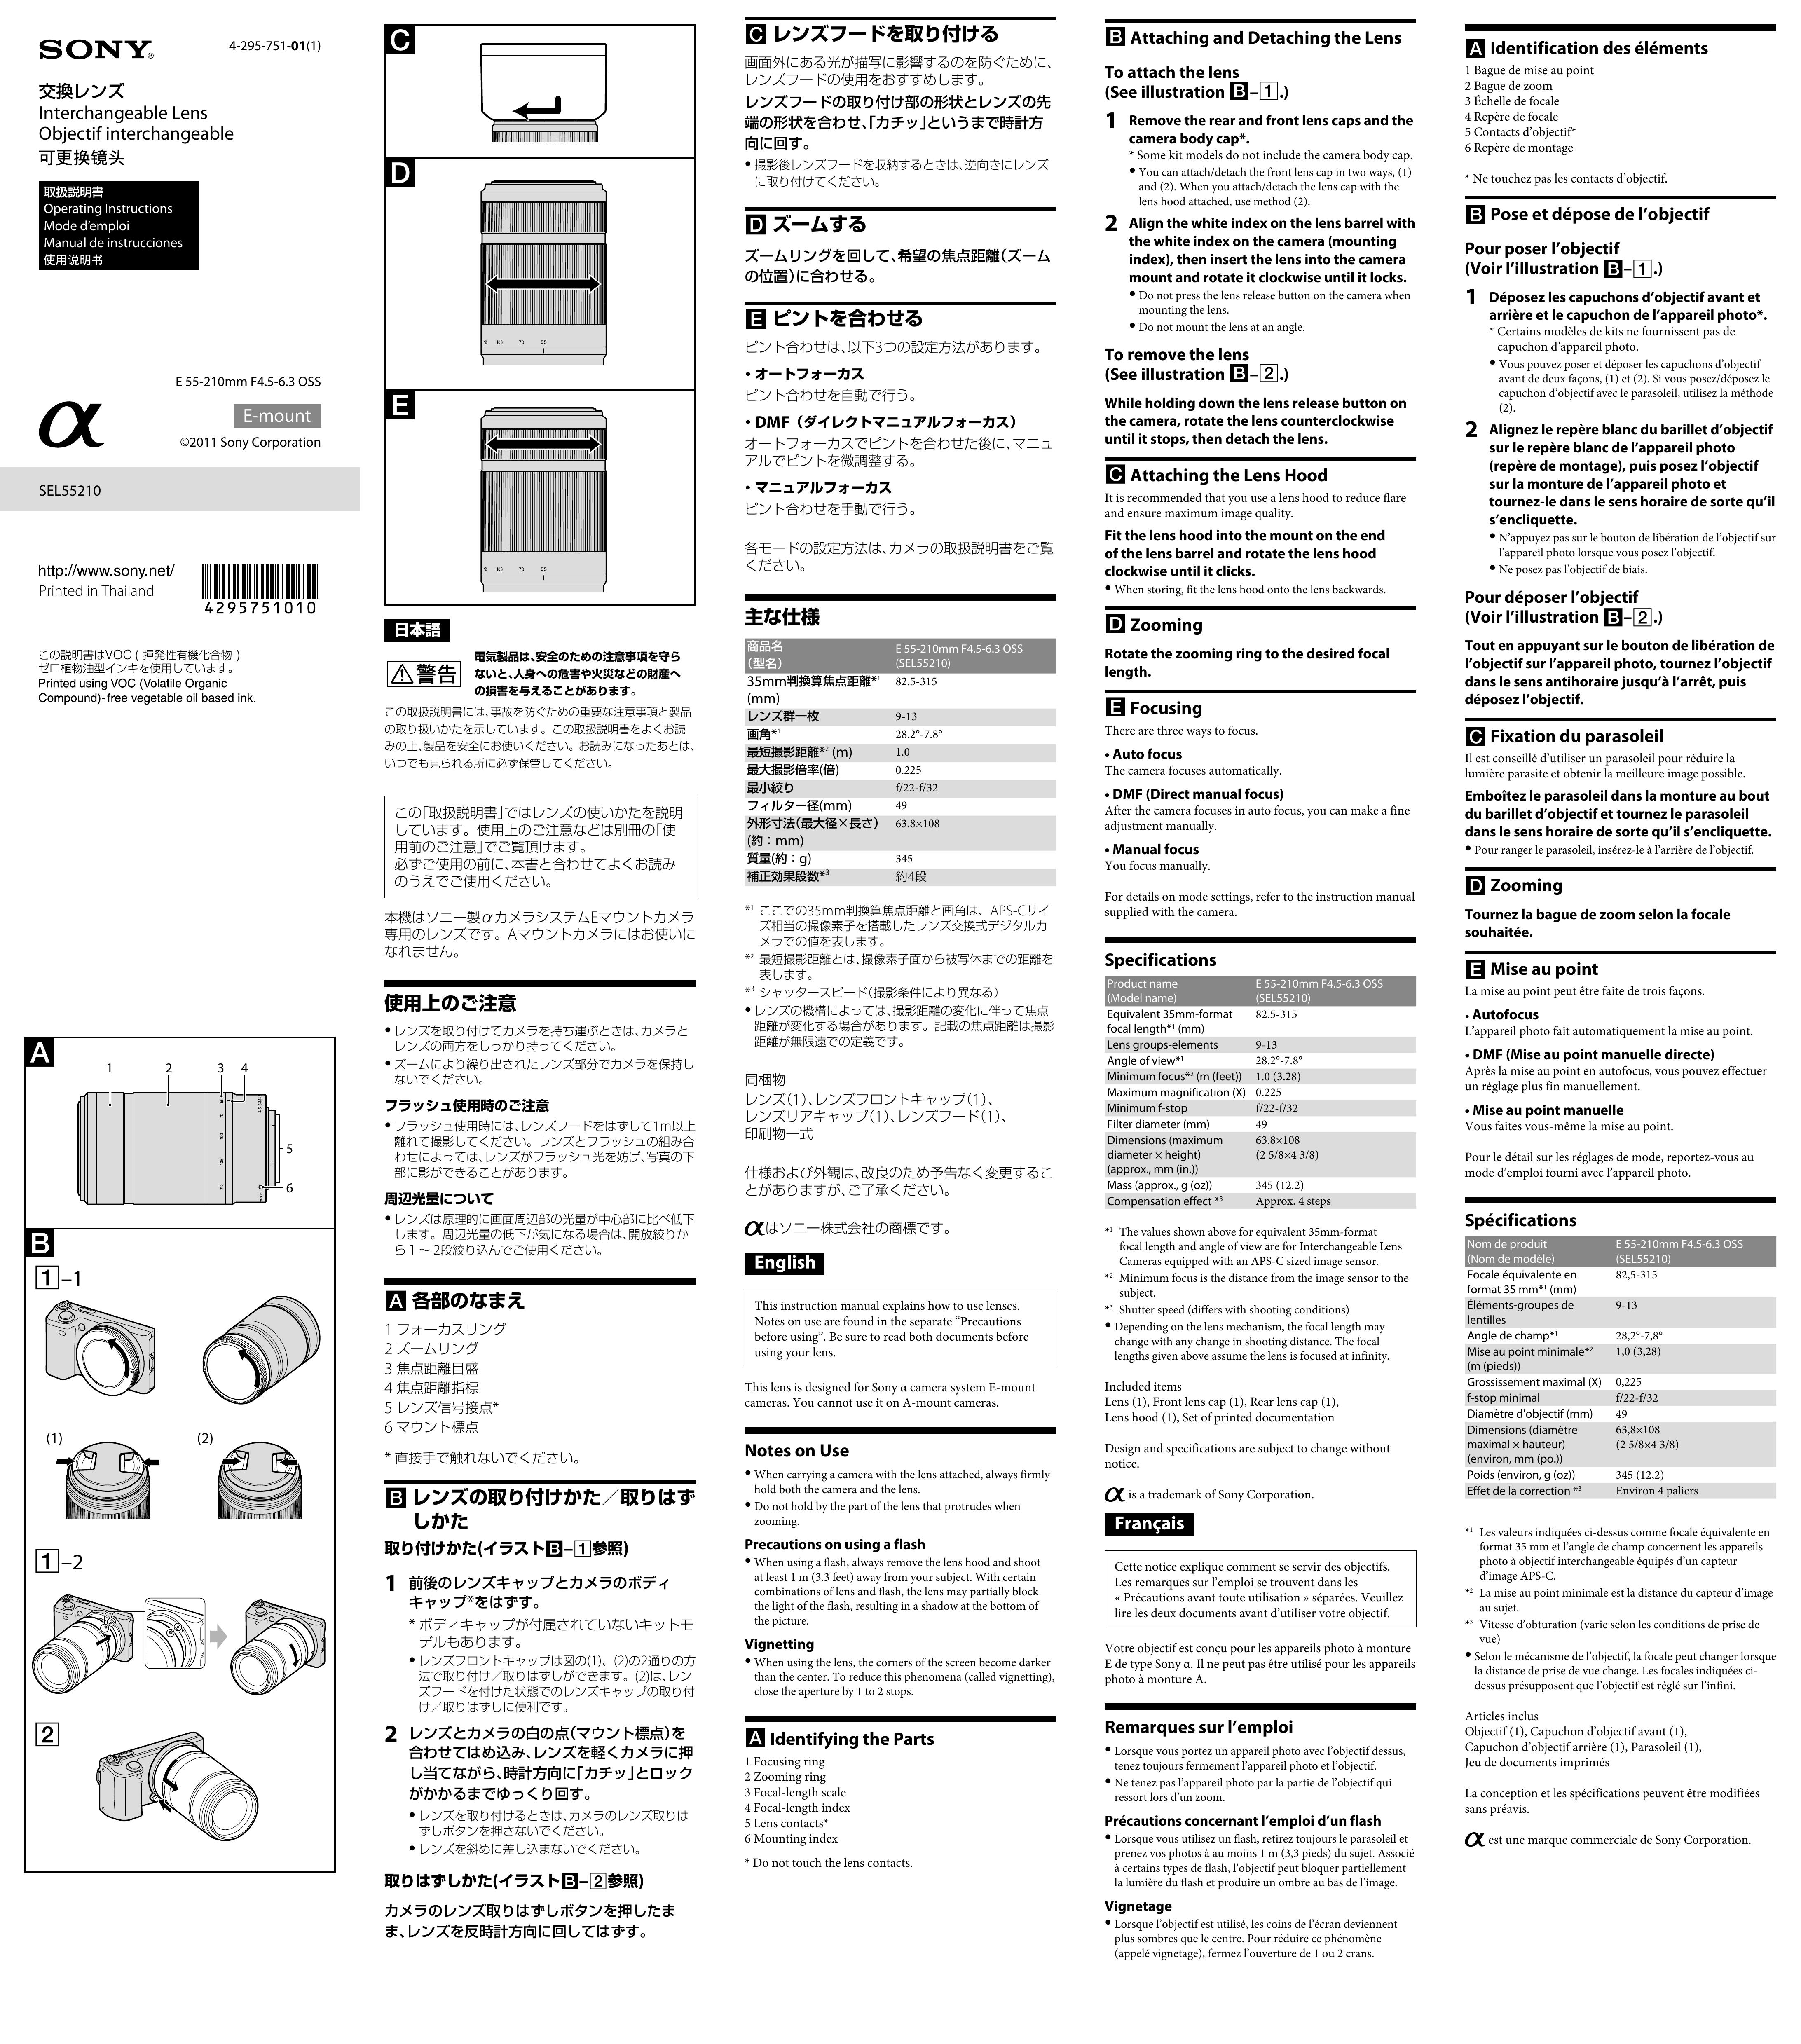 Sony E 55-210mm F4.5-6.3 OSS Camera Lens User Manual